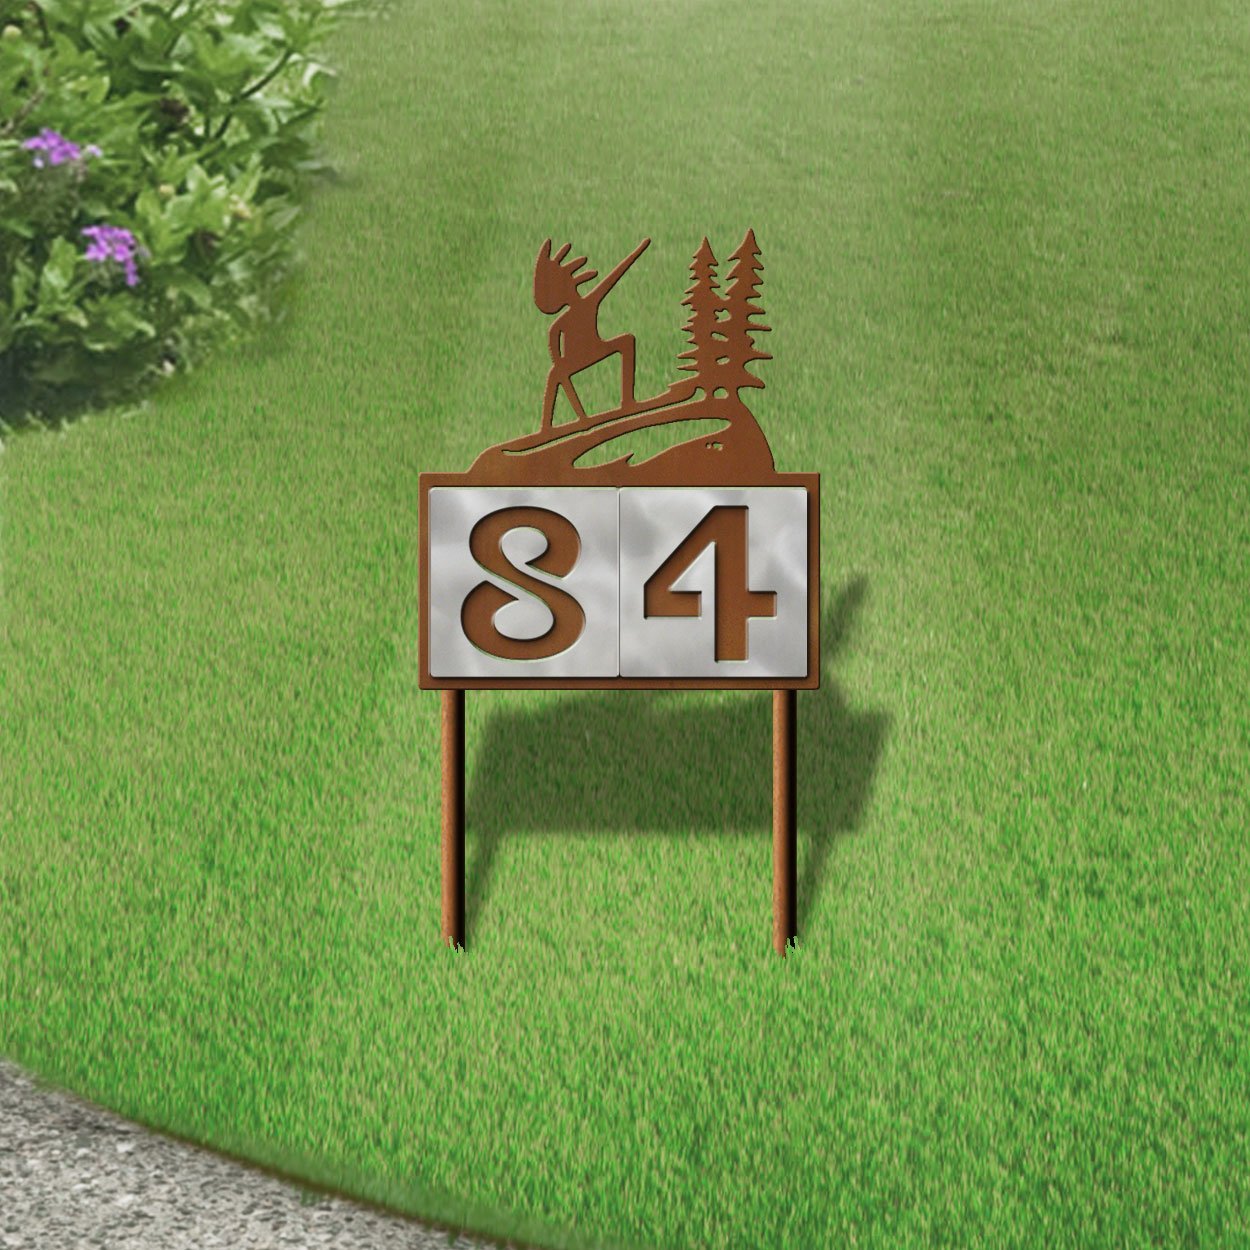 610172 - Shredding Kokopelli Design 2-Digit Horizontal 6-inch Tile Outdoor House Numbers Yard Sign